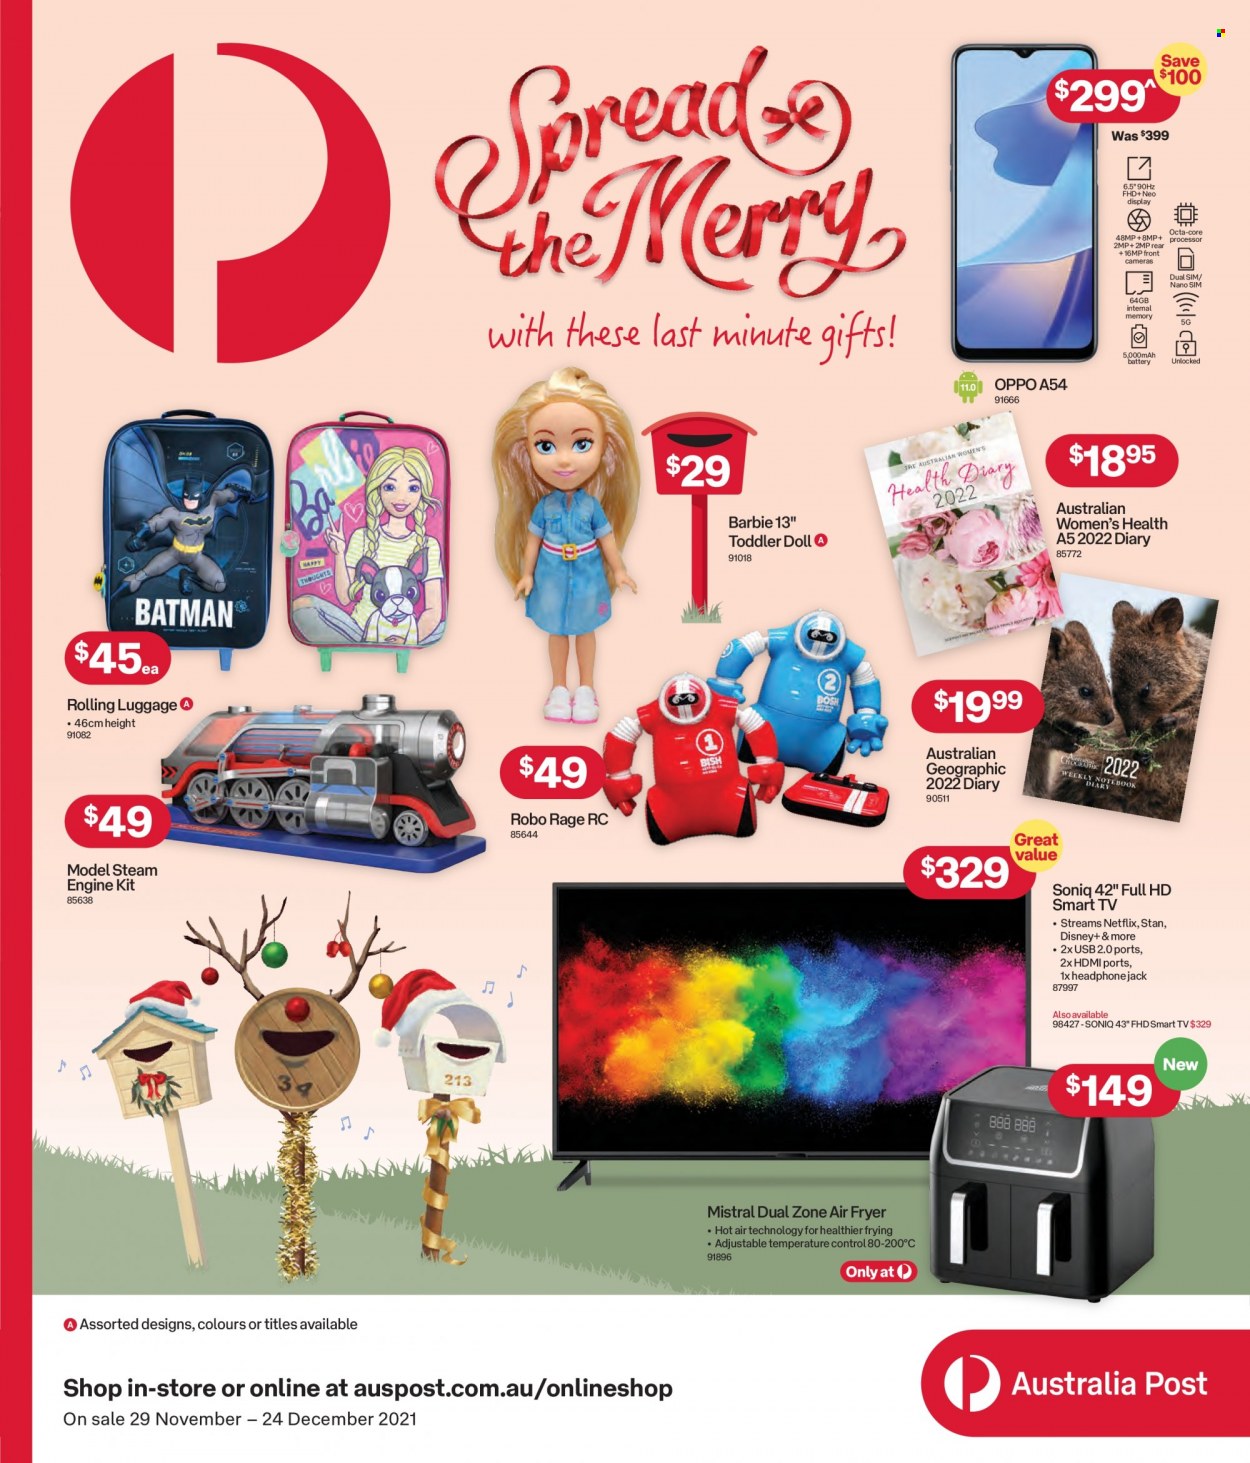 thumbnail - Australia Post Catalogue - 29 Nov 2021 - 24 Dec 2021 - Sales products - Barbie, Disney, diary, Batman, Oppo, camera, smart tv, TV, headphones, air fryer, doll. Page 1.